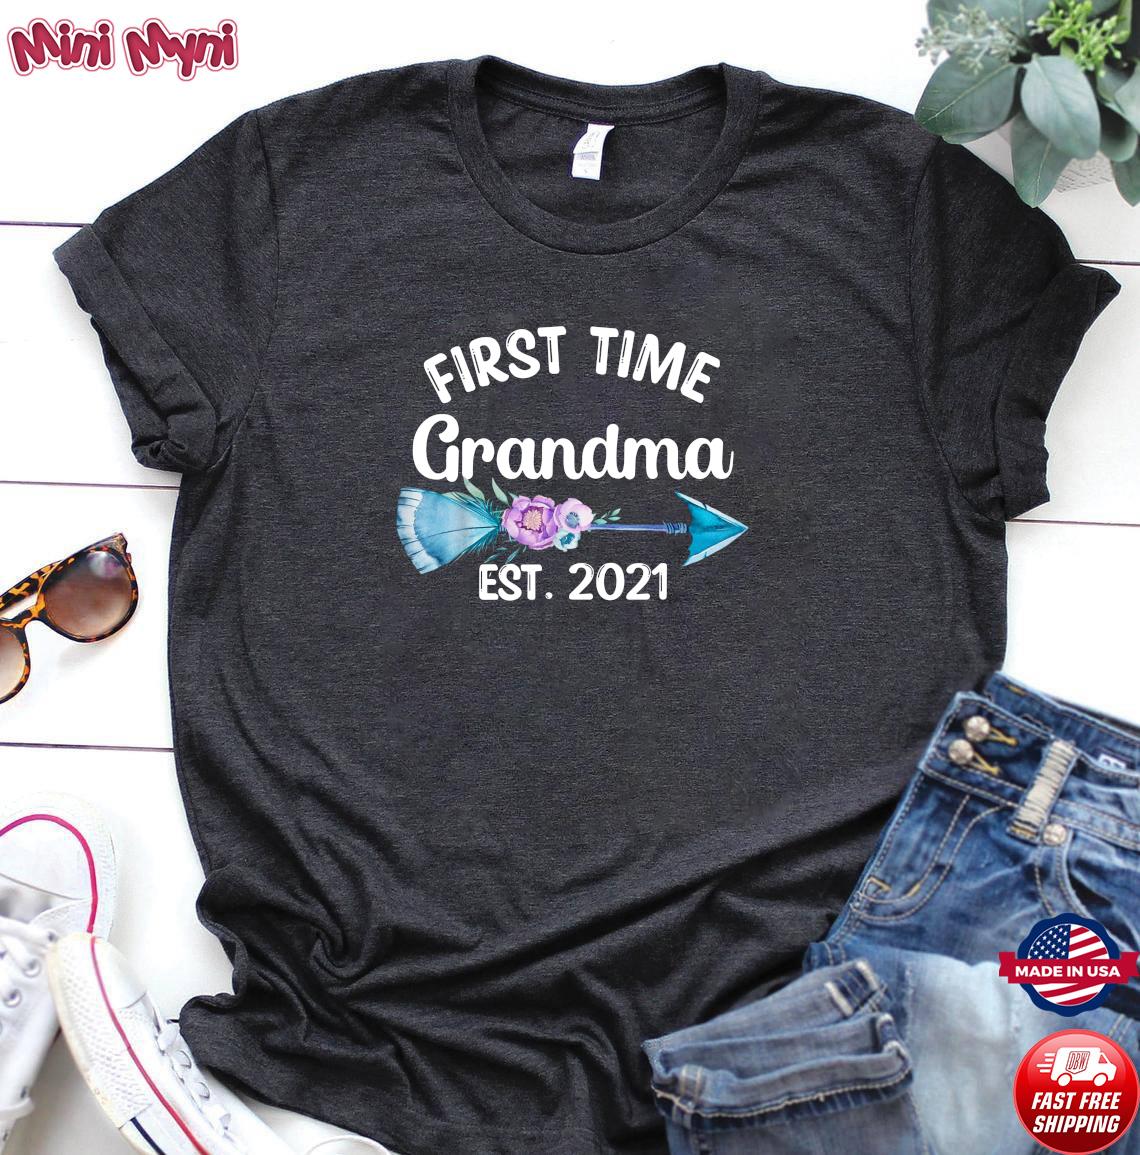 First Time Grandma Shirt, Pregnancy Announcement Shirt, First Time